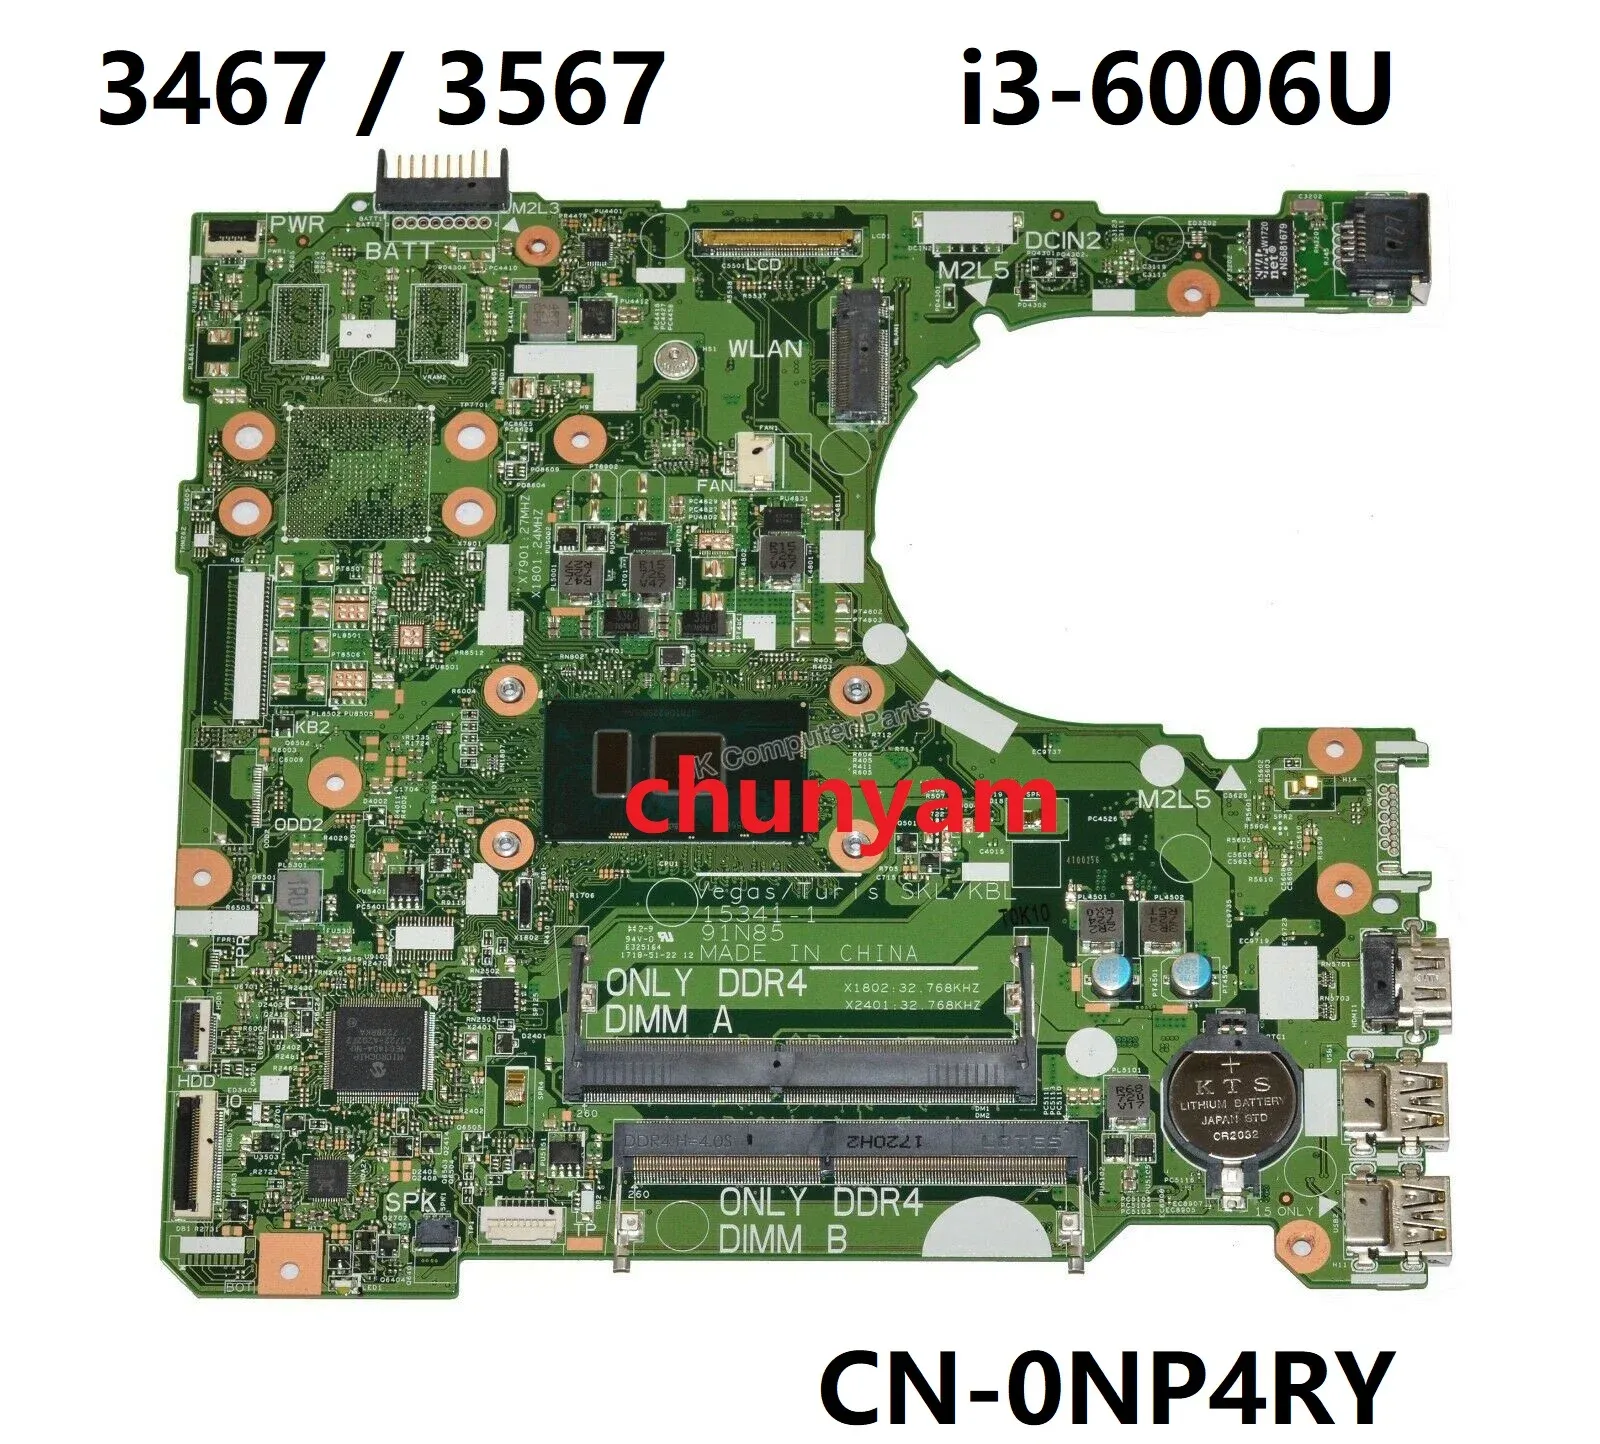 RAMS 153411 W / I36006U pour Dell Inspiron Series 14 3467/15 3567 ordinateur portable carte mère CN0NP4RY NP4RY